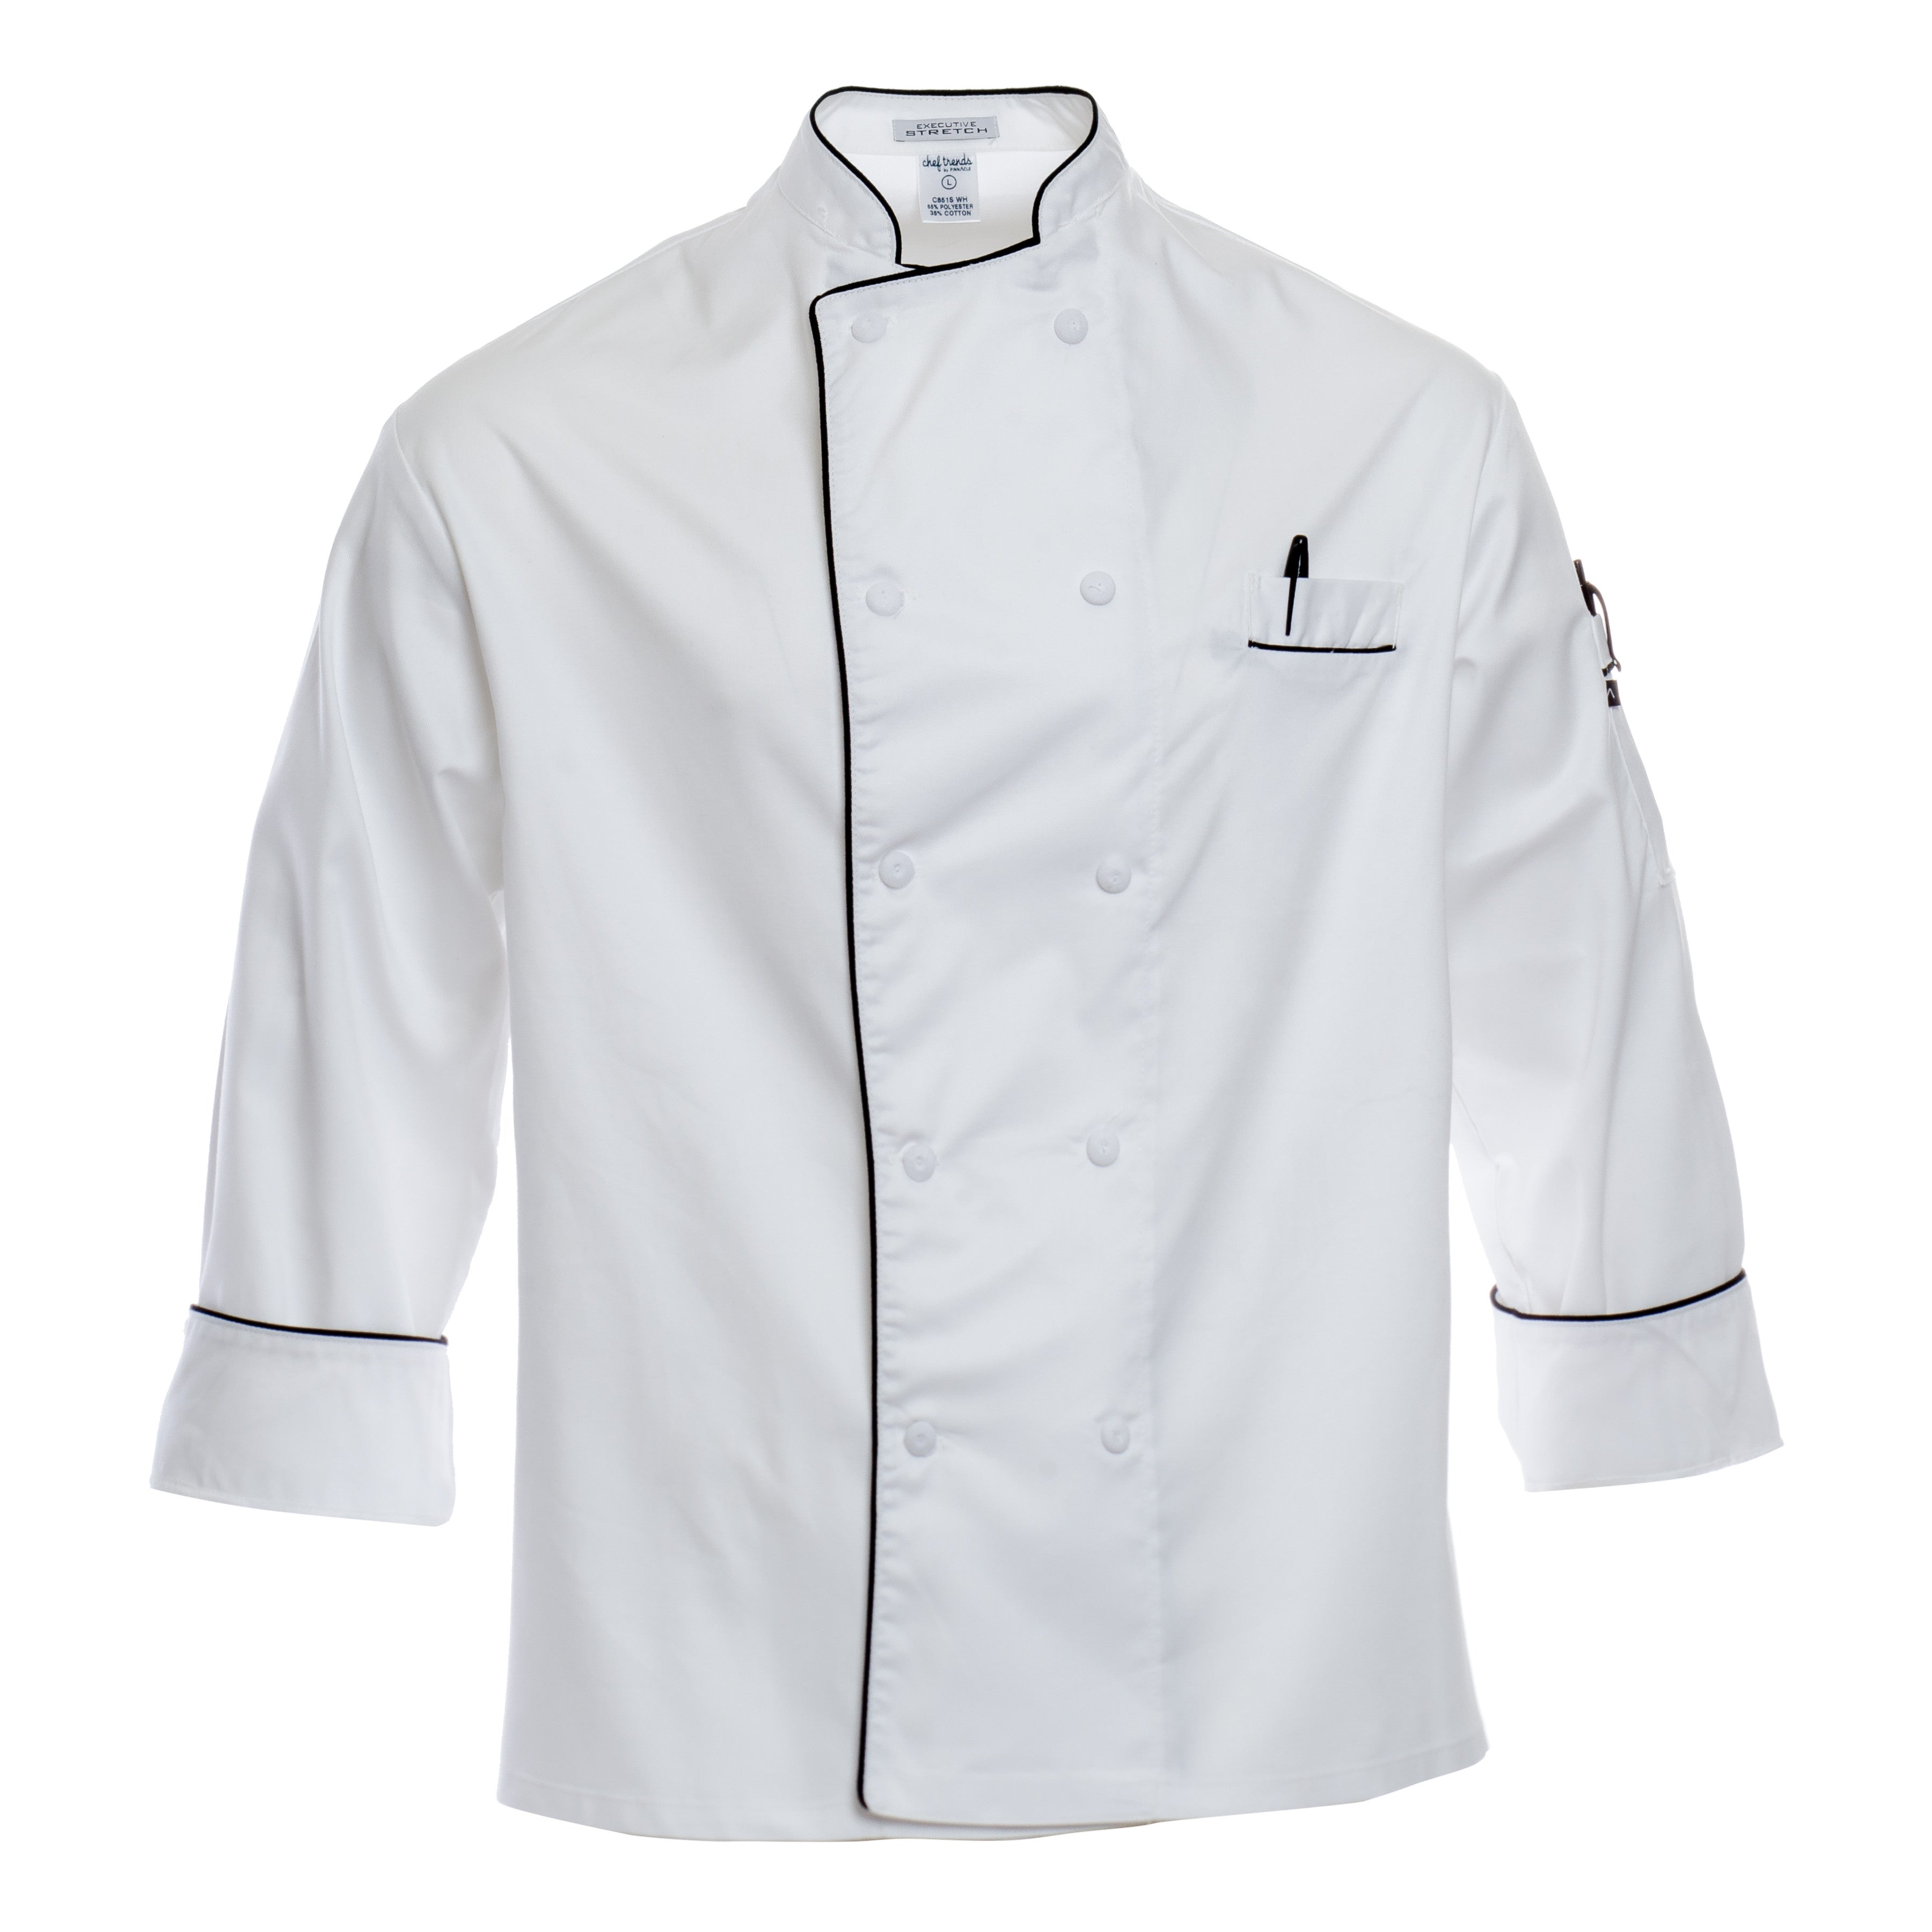 Auguste Chef Jacket Design, White - S | Boldric